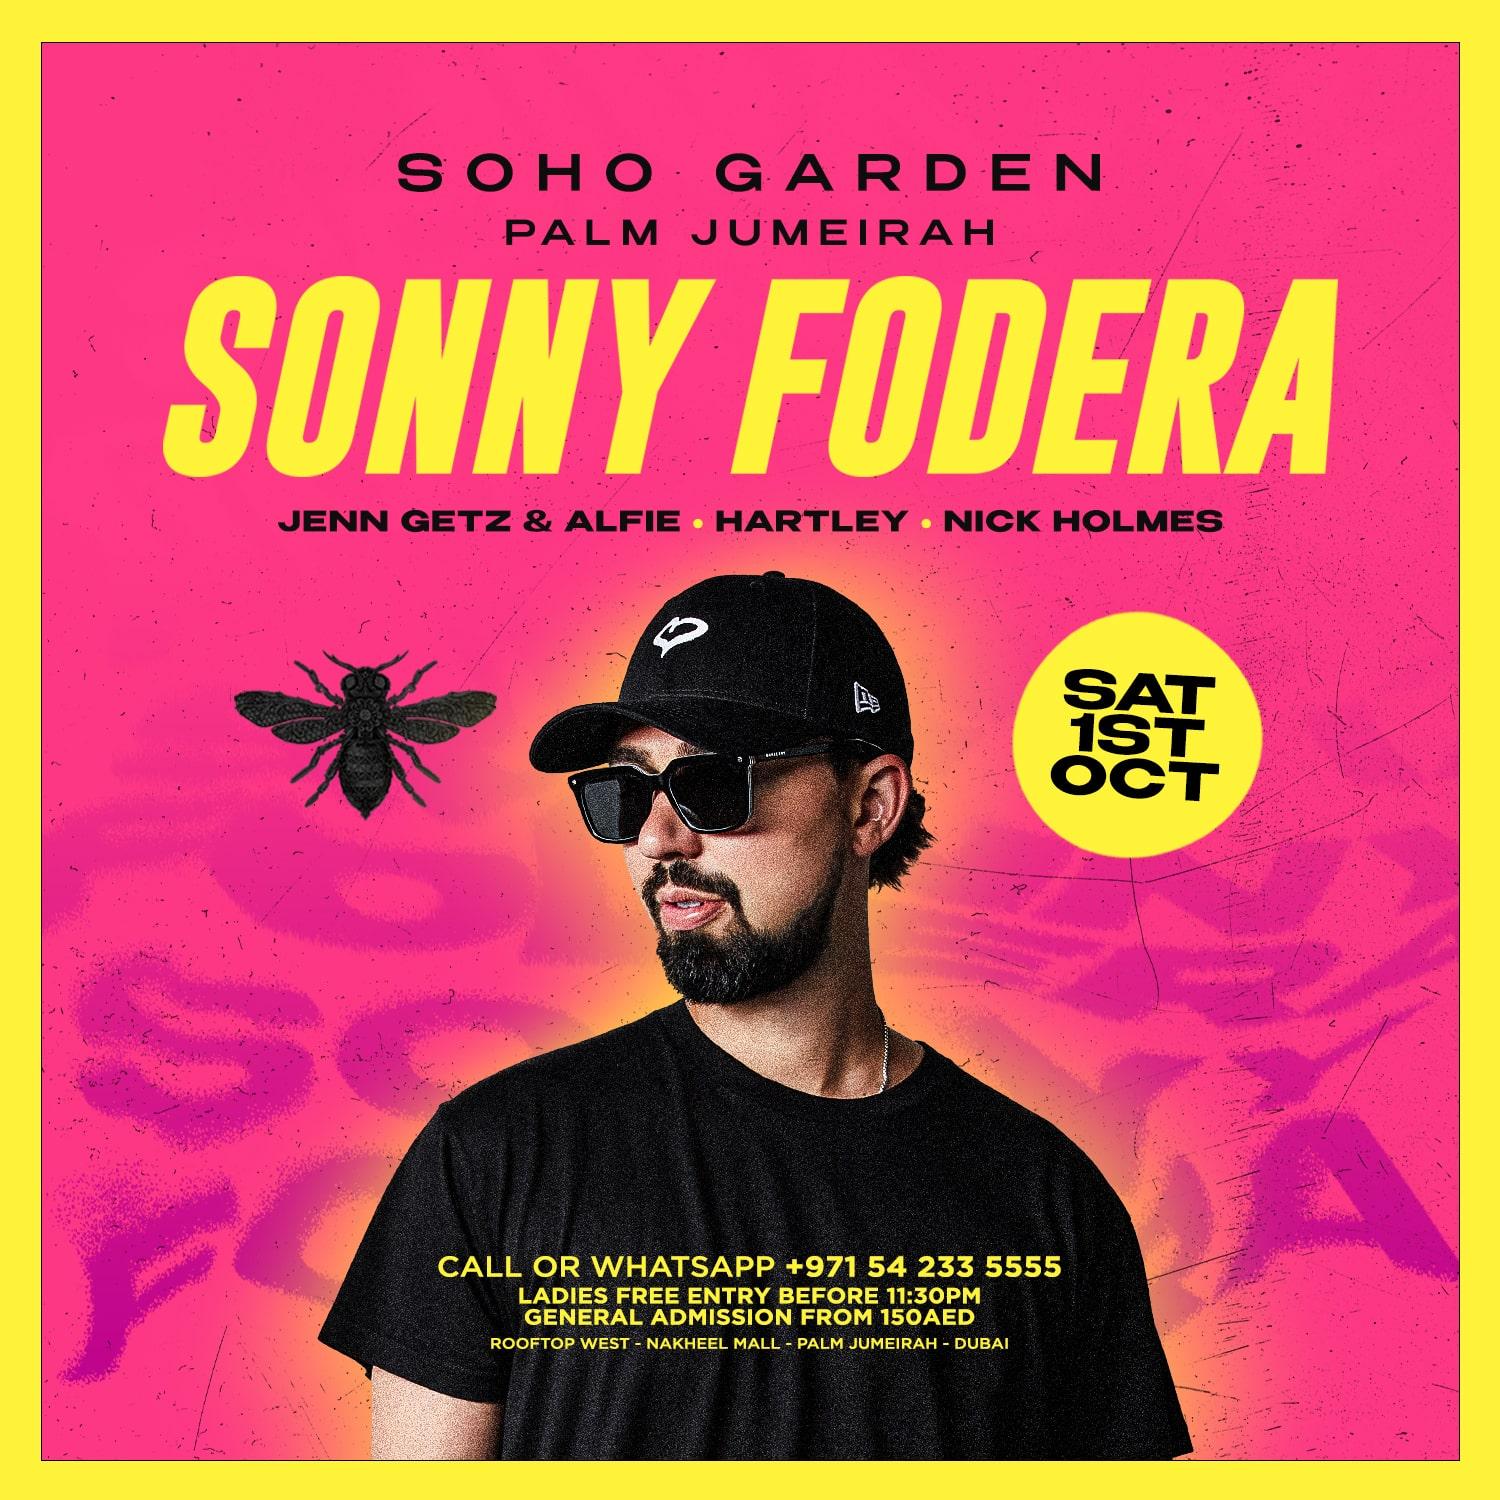 Sonny Fodera 01.10.22 at Soho Garden Palm Jumeirah